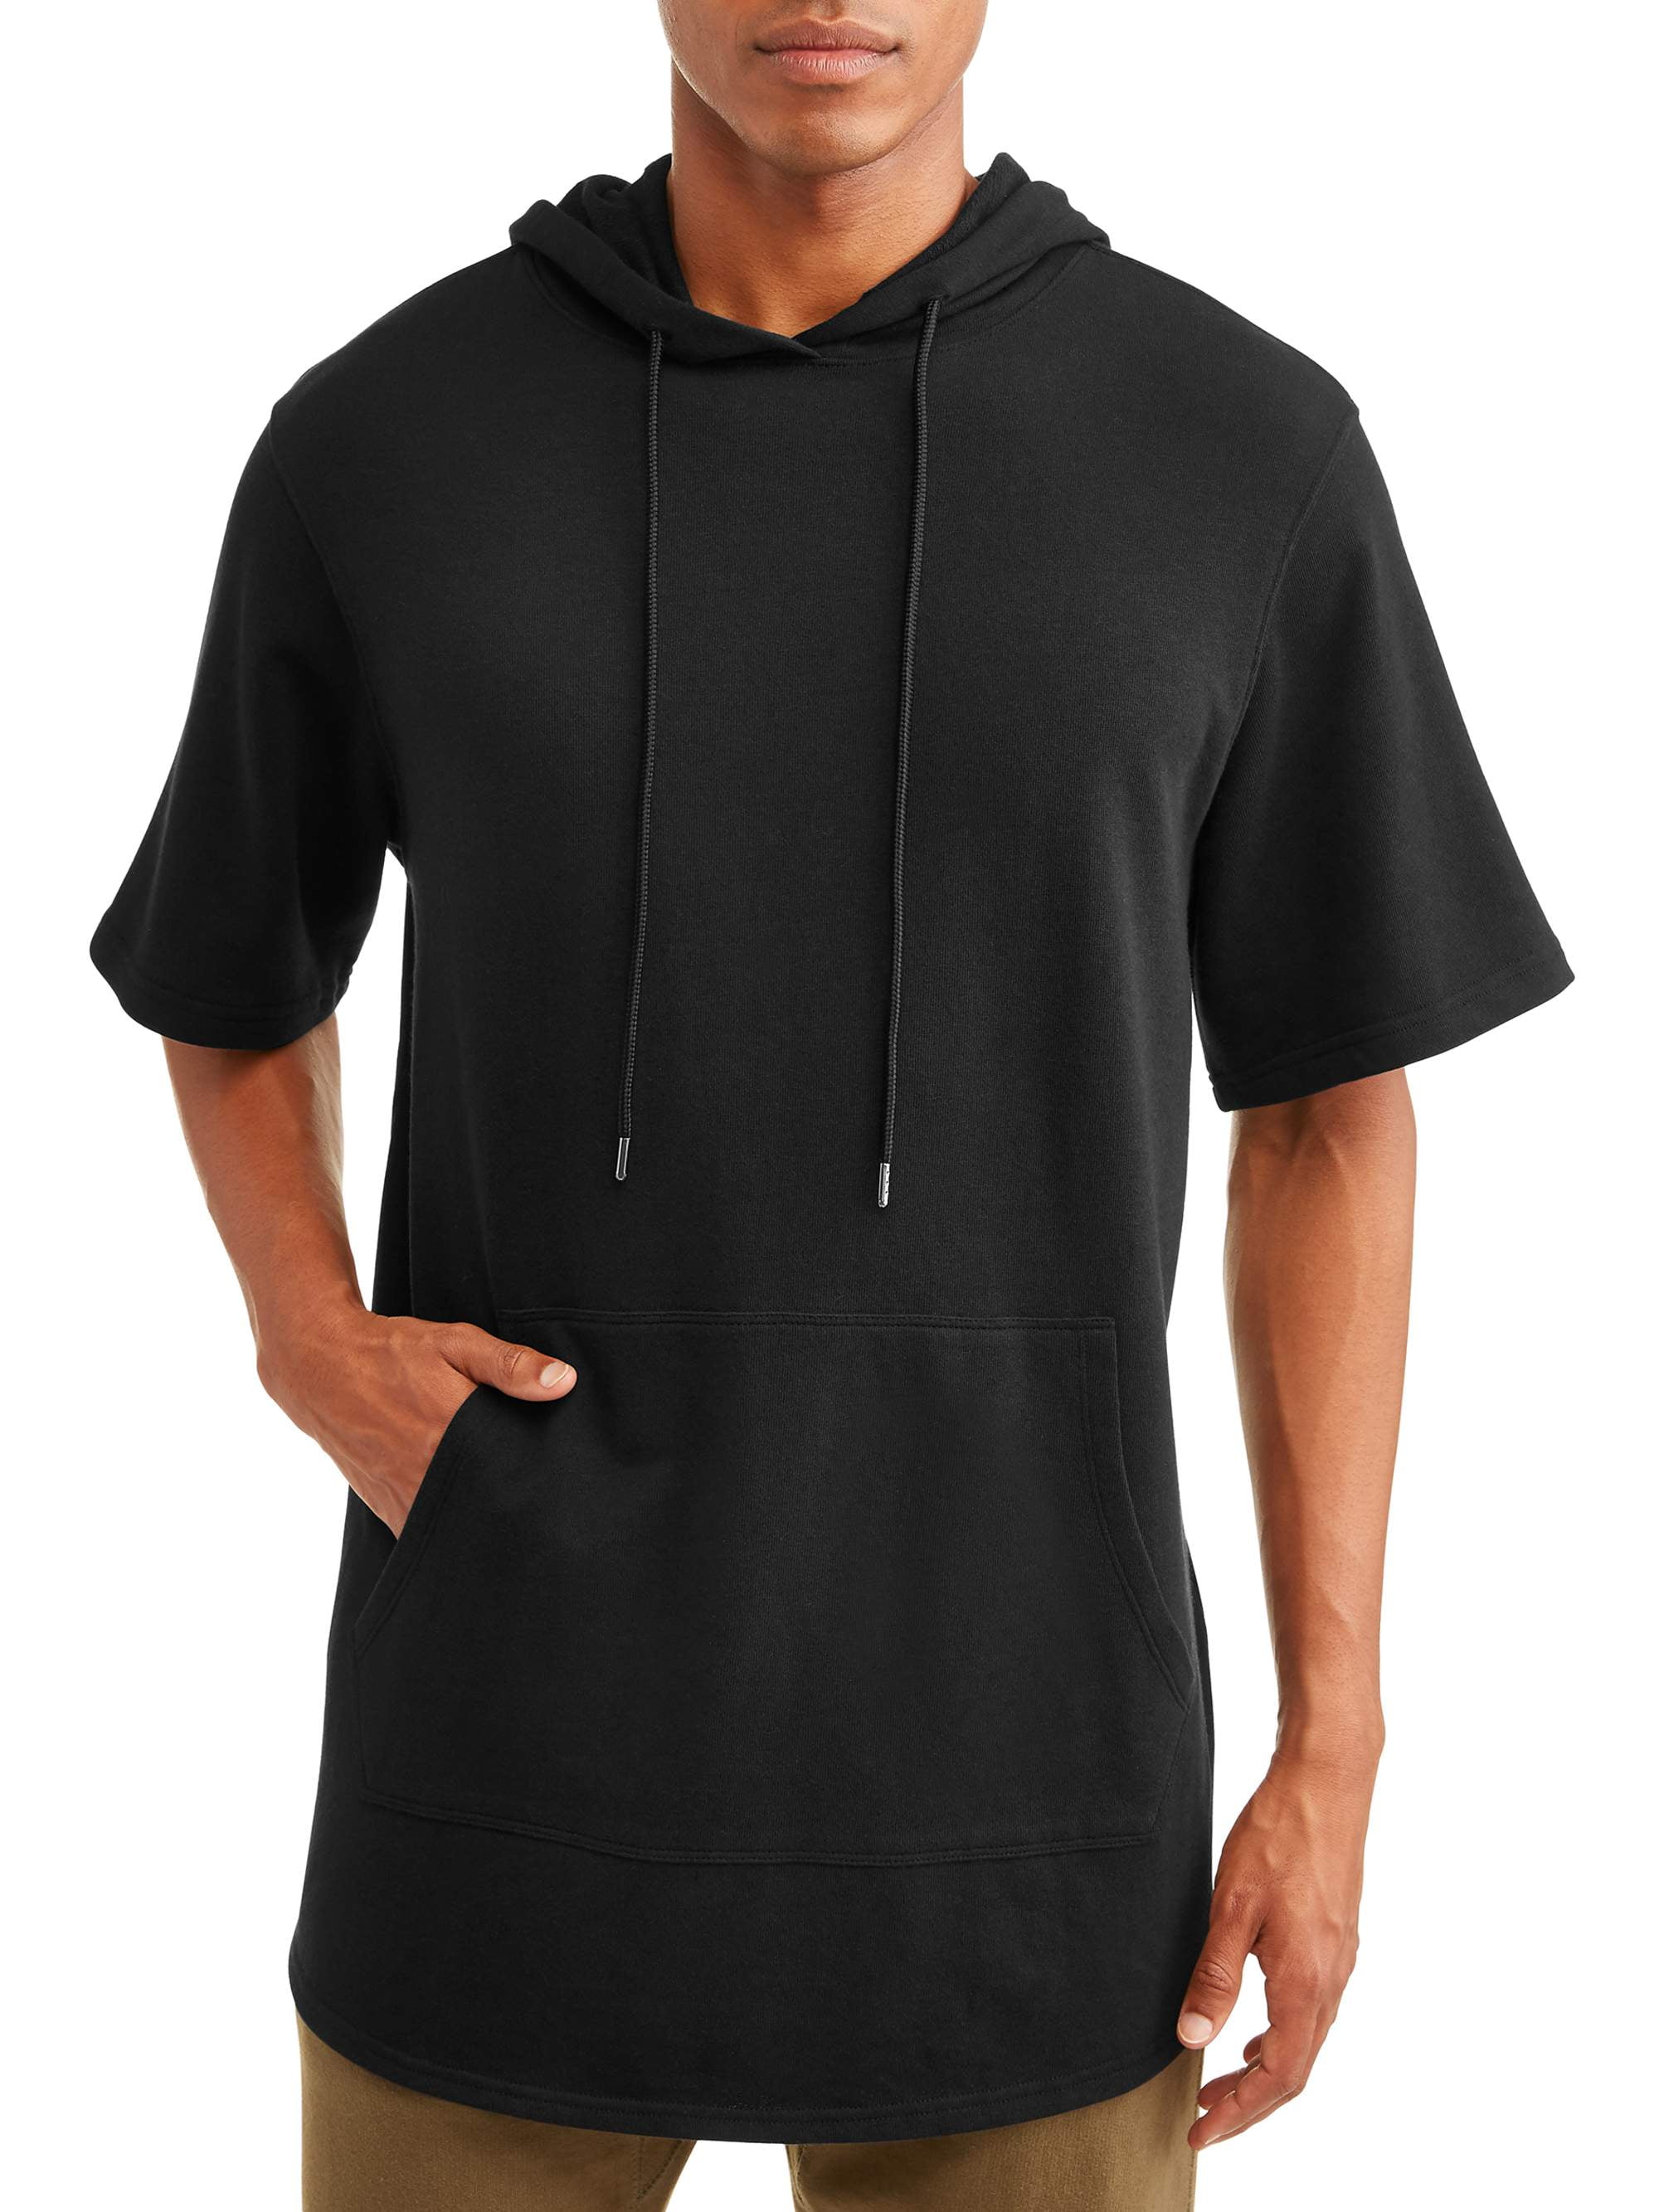 Unisex Hoodie Sweatshirt For Mens Womens Ladies Kids Short Sleeves Shirt Blitzcrank Slim Fit TShirt